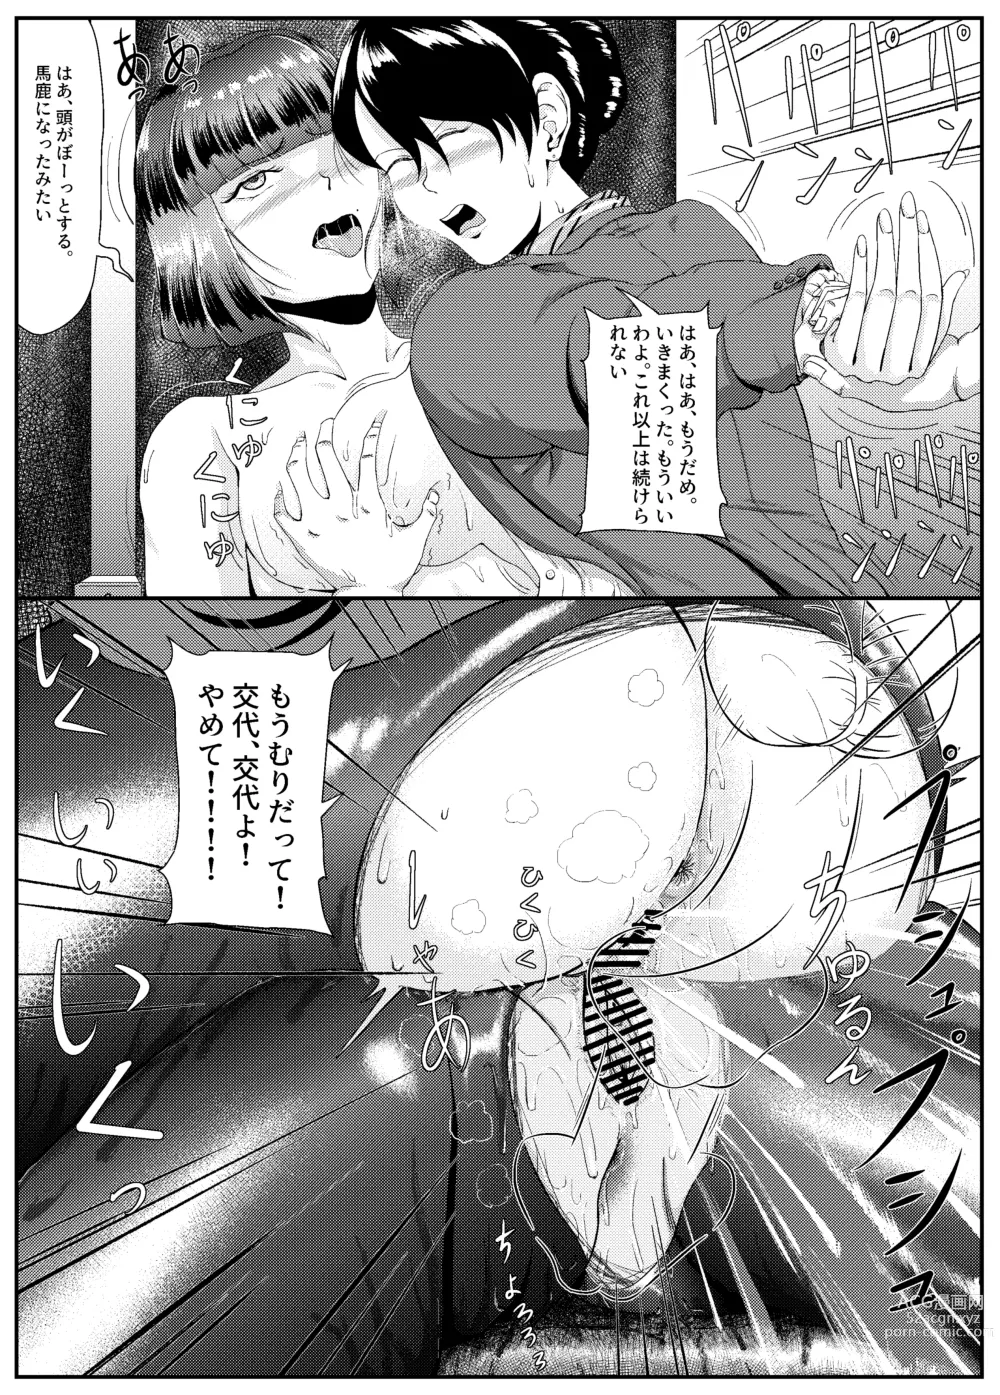 Page 128 of manga 隣のキャビンアテンダントお姉さん第1~5話